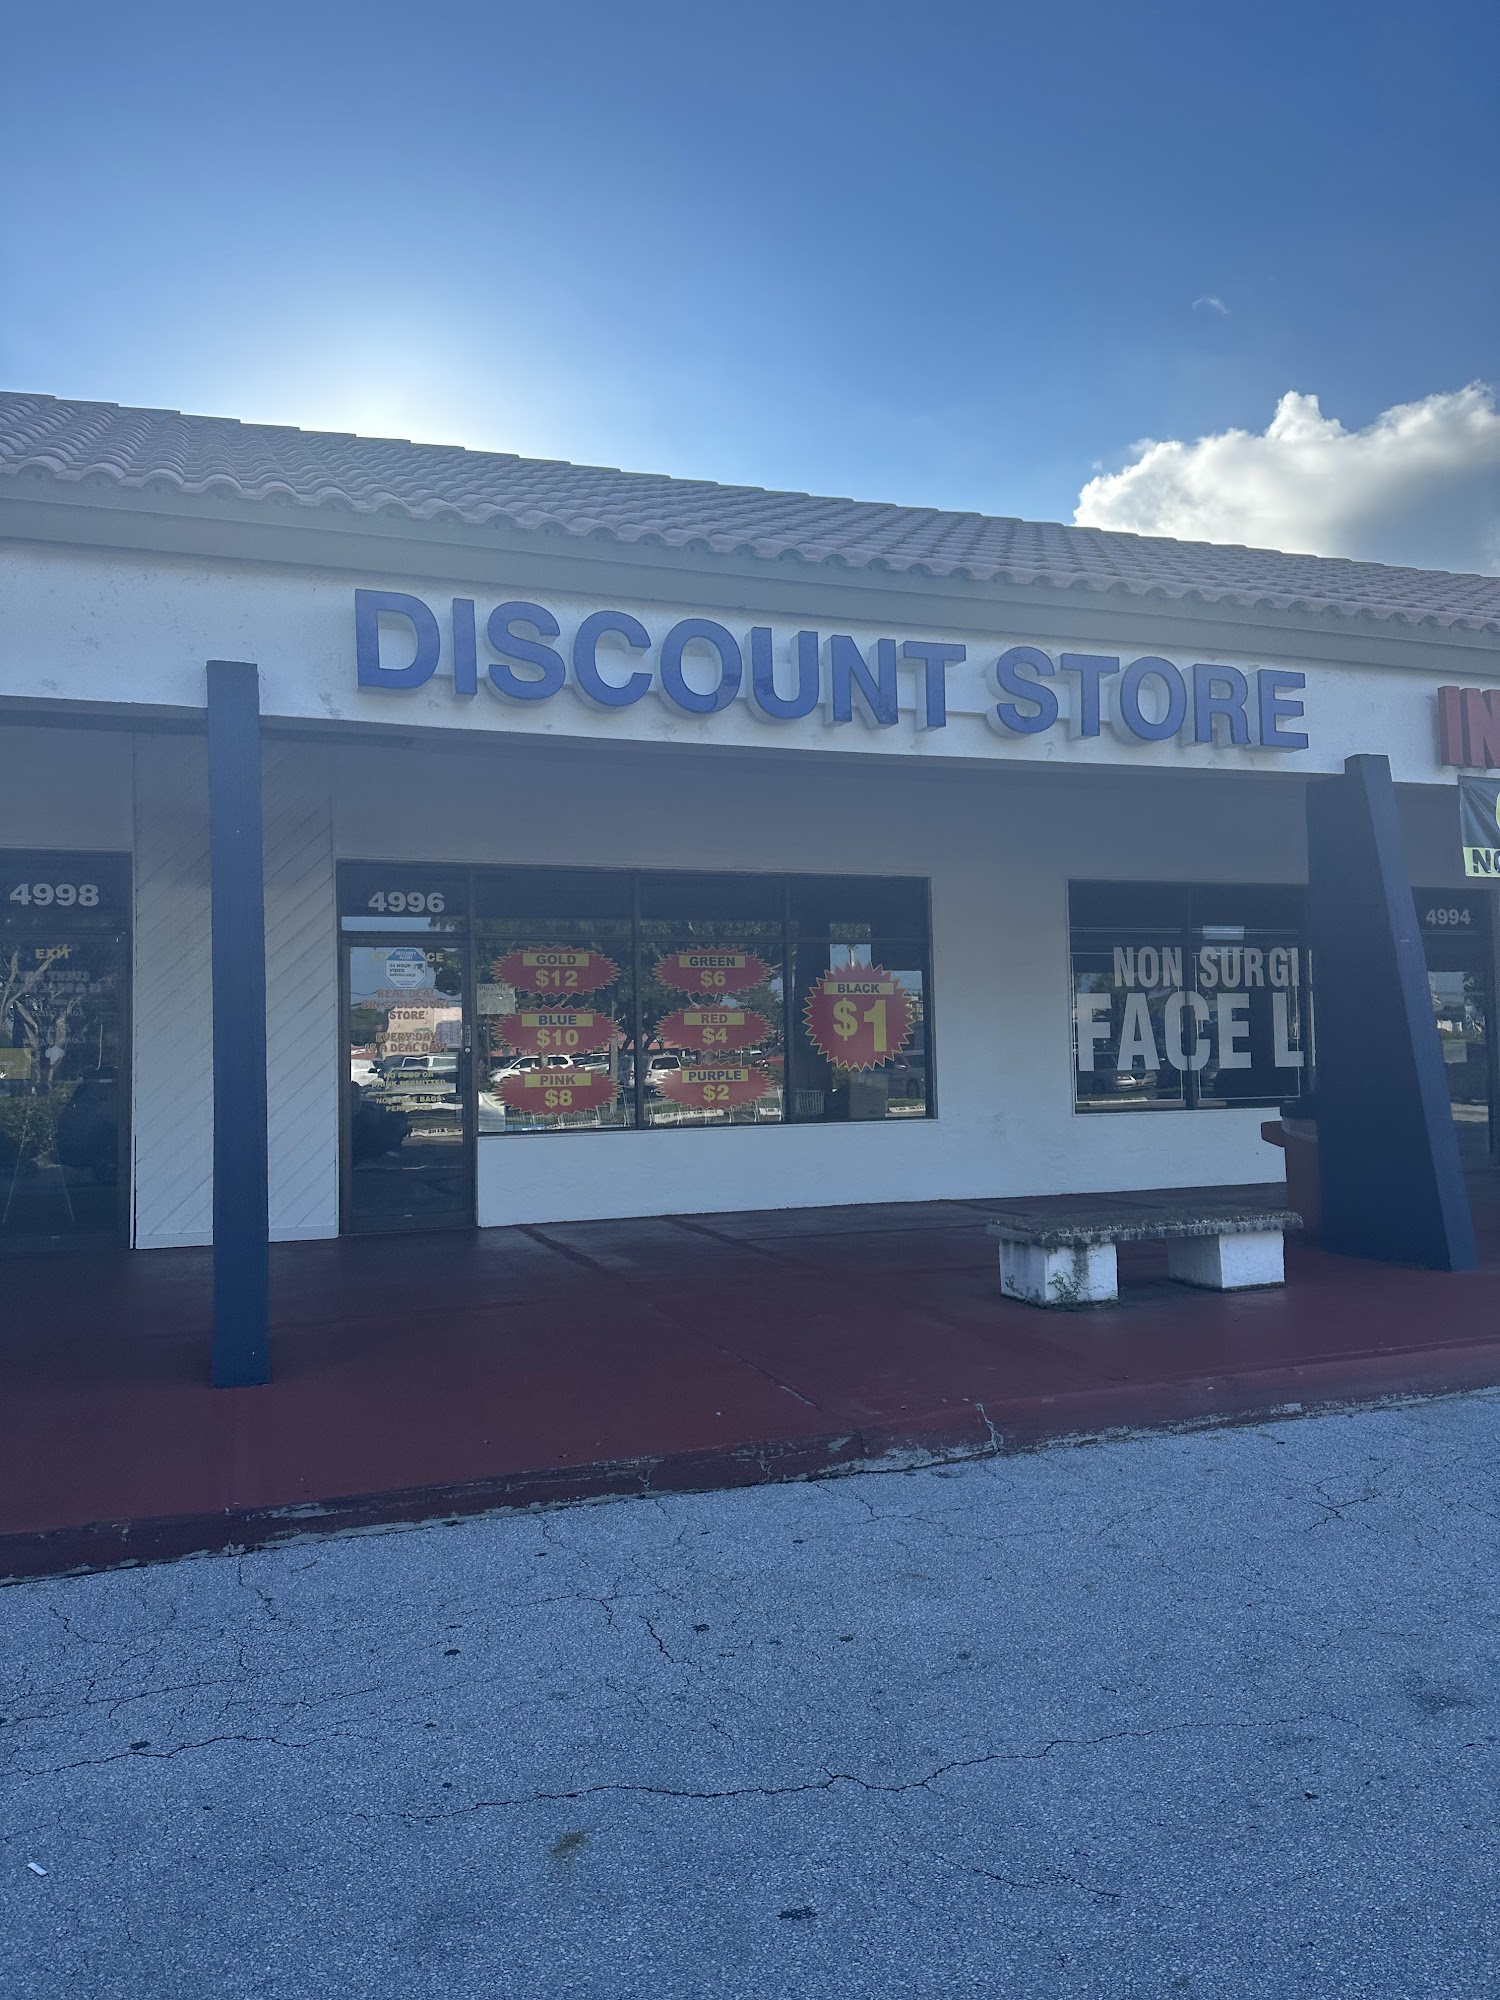 Real Deal Bin & Discount Store